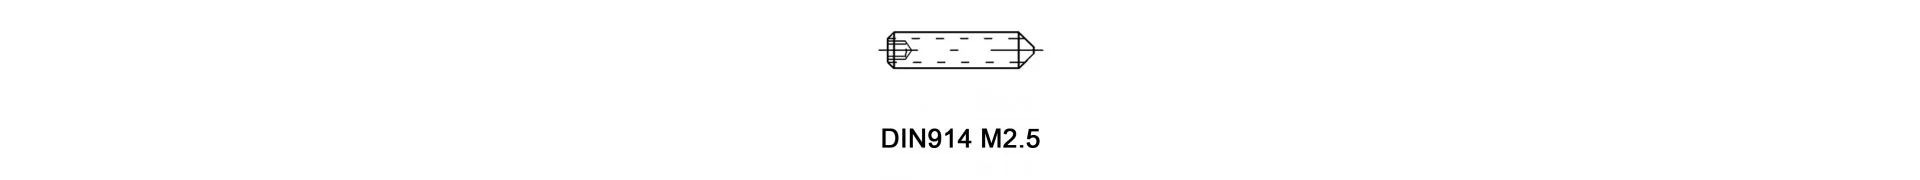 DIN914 M2.5